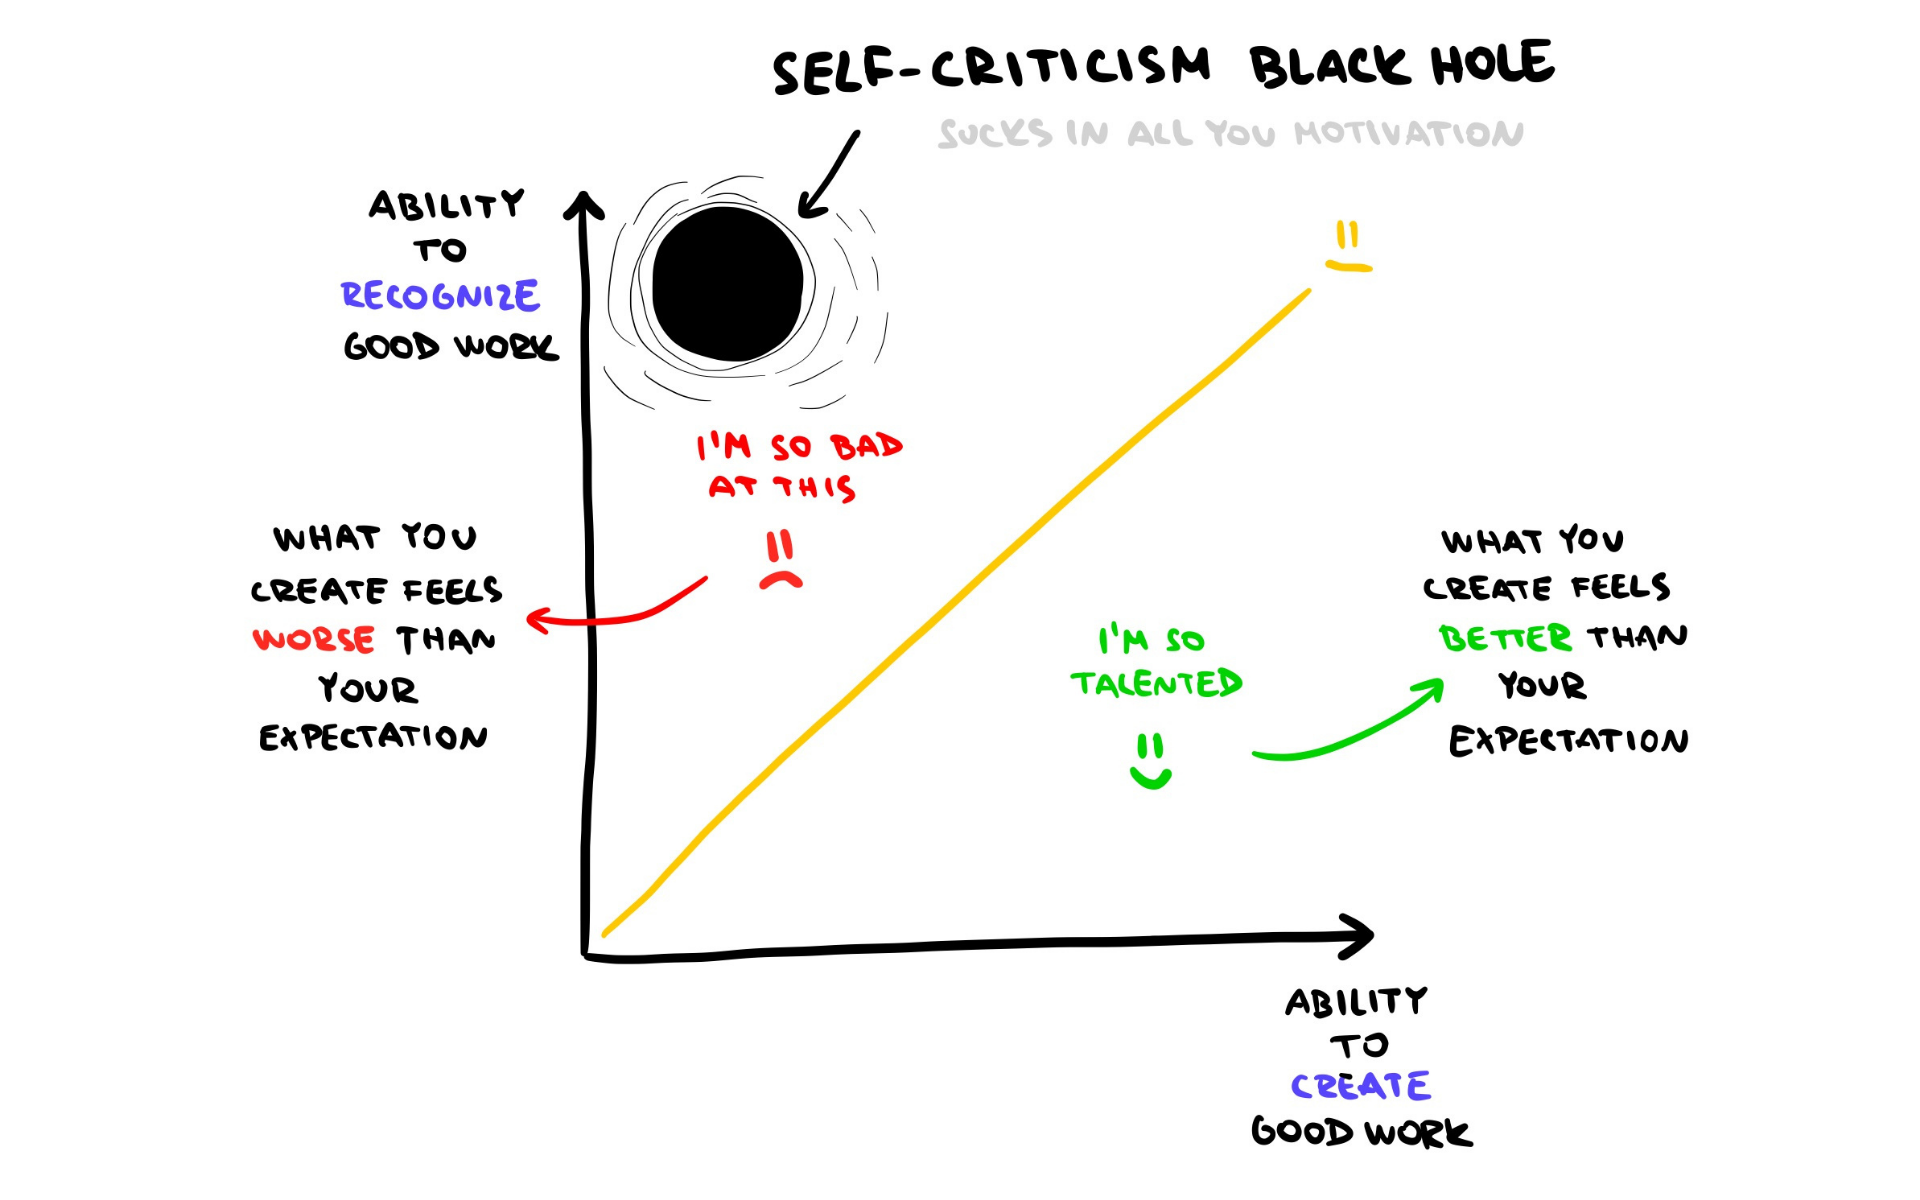 Self-criticism black hole